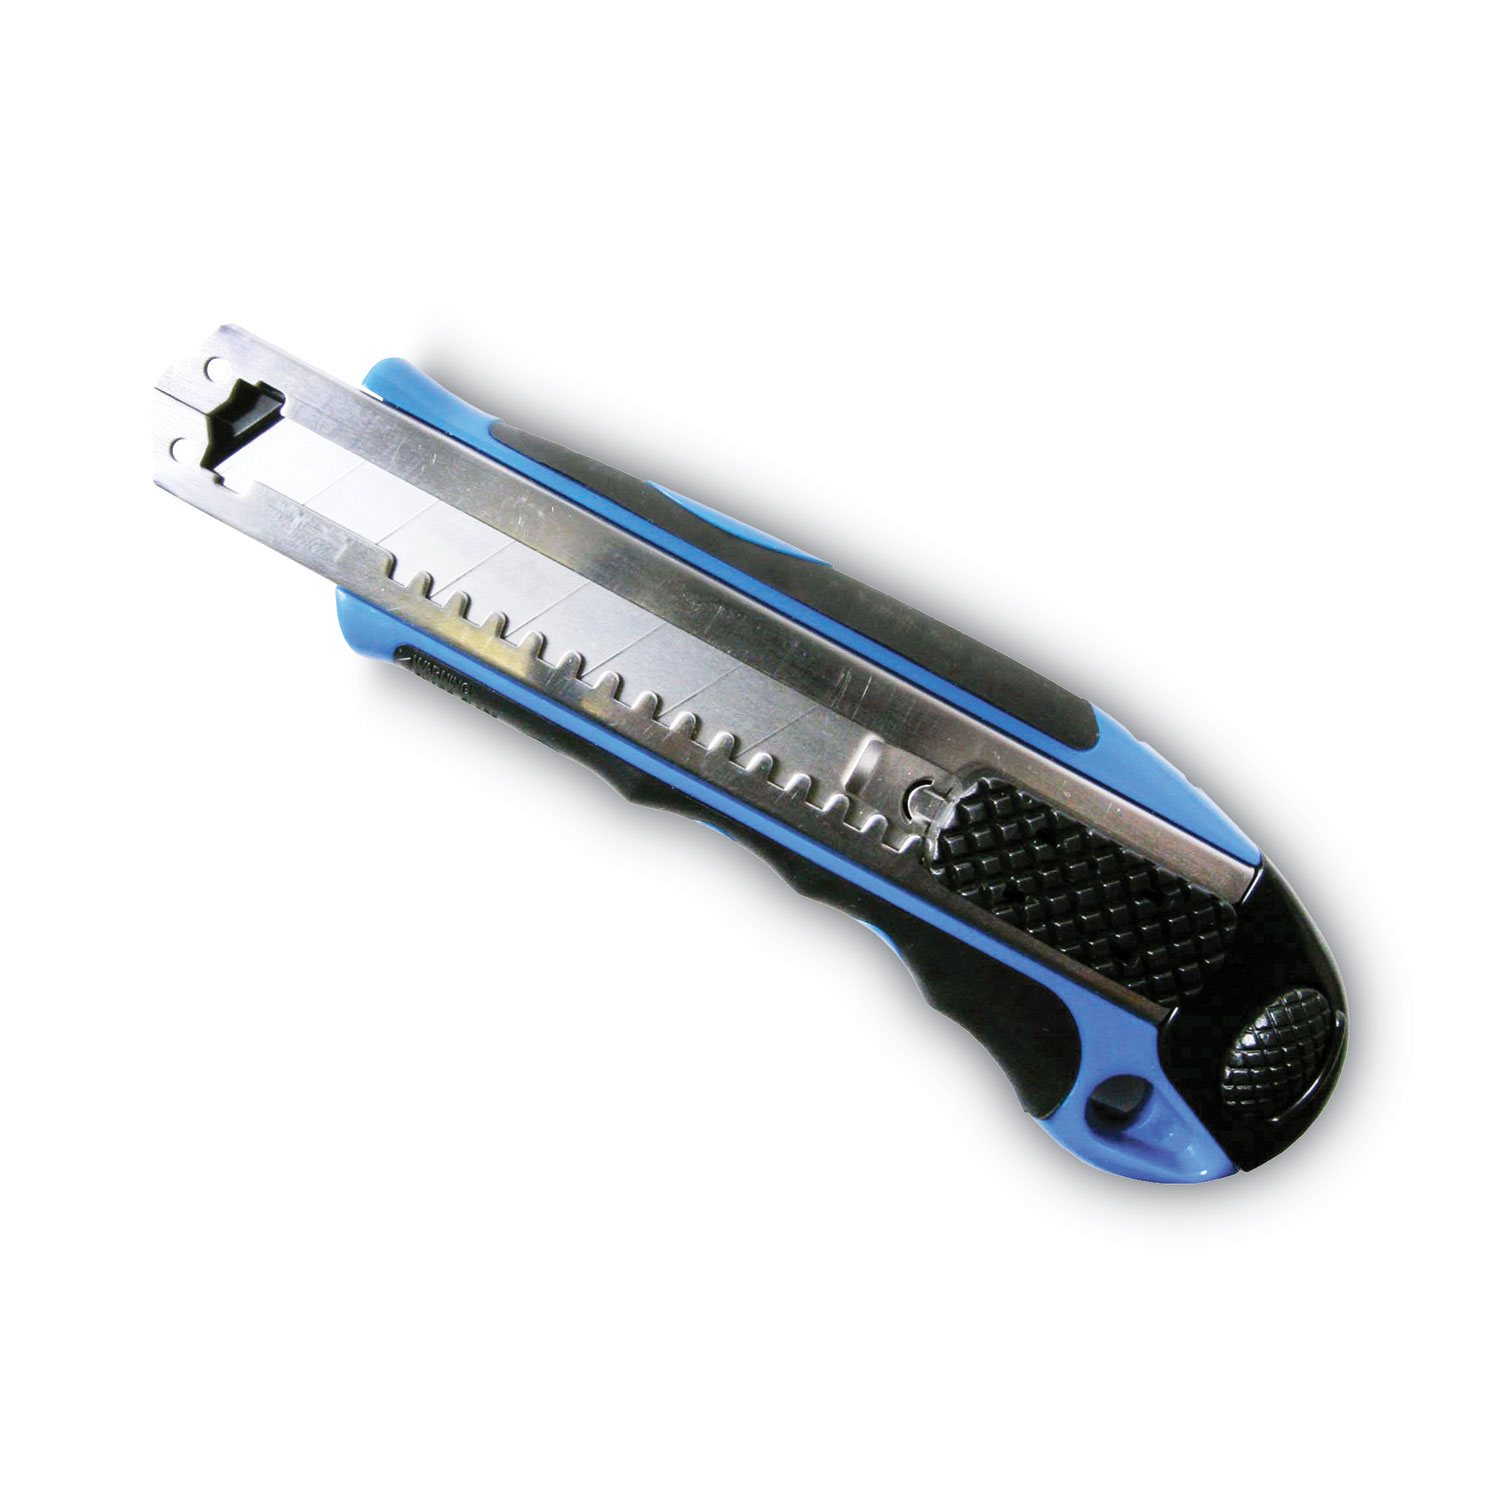 COSCO 091524 Box Cutter Knife w/Shielded Blade, Black/Blue - 091524